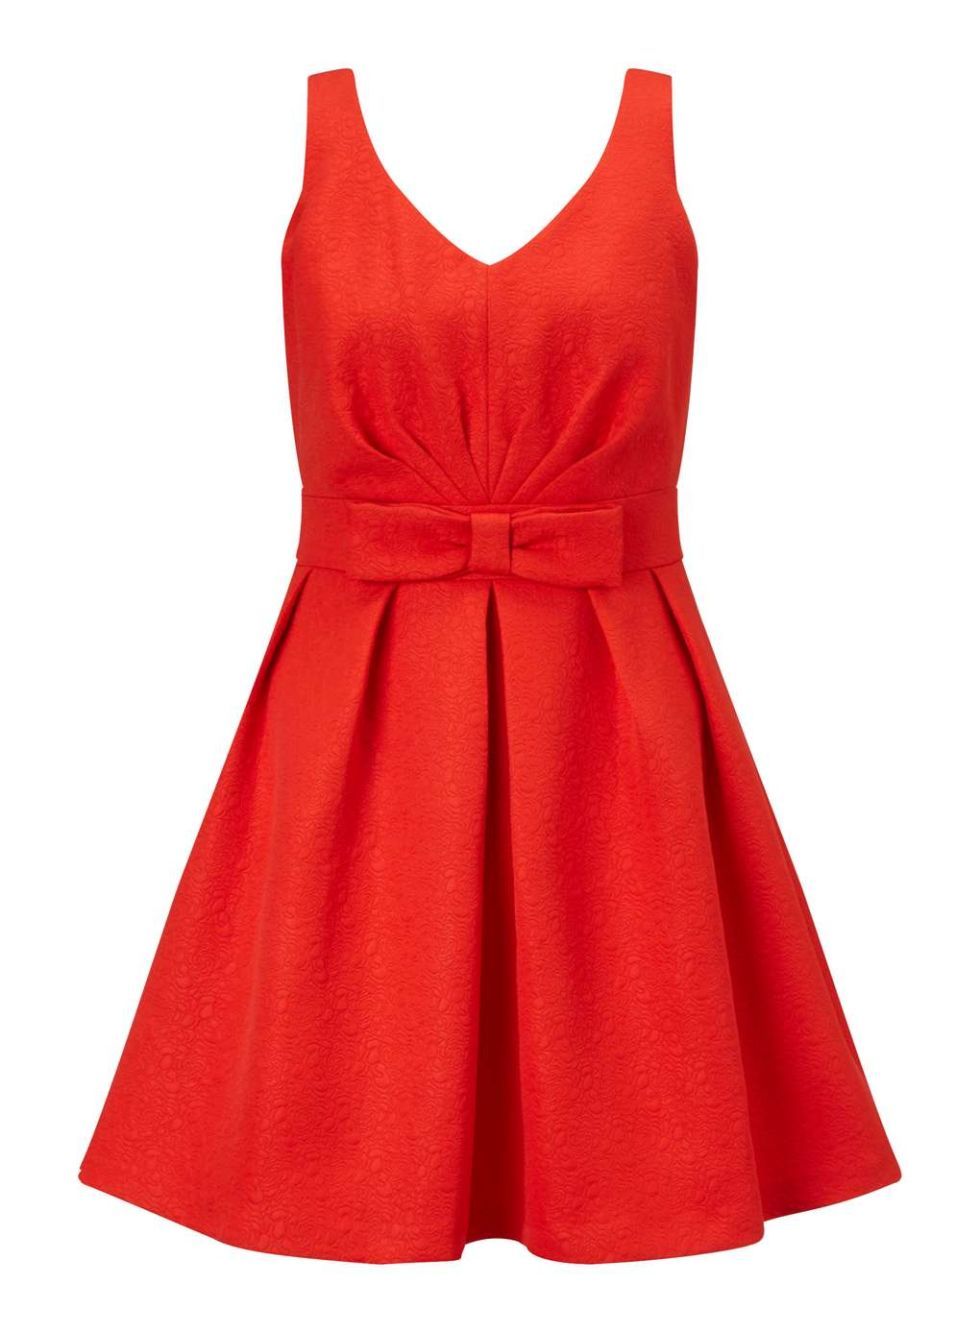 Dress, Textile, Red, One-piece garment, Pattern, Orange, Fashion, Day dress, Maroon, Fashion design, 